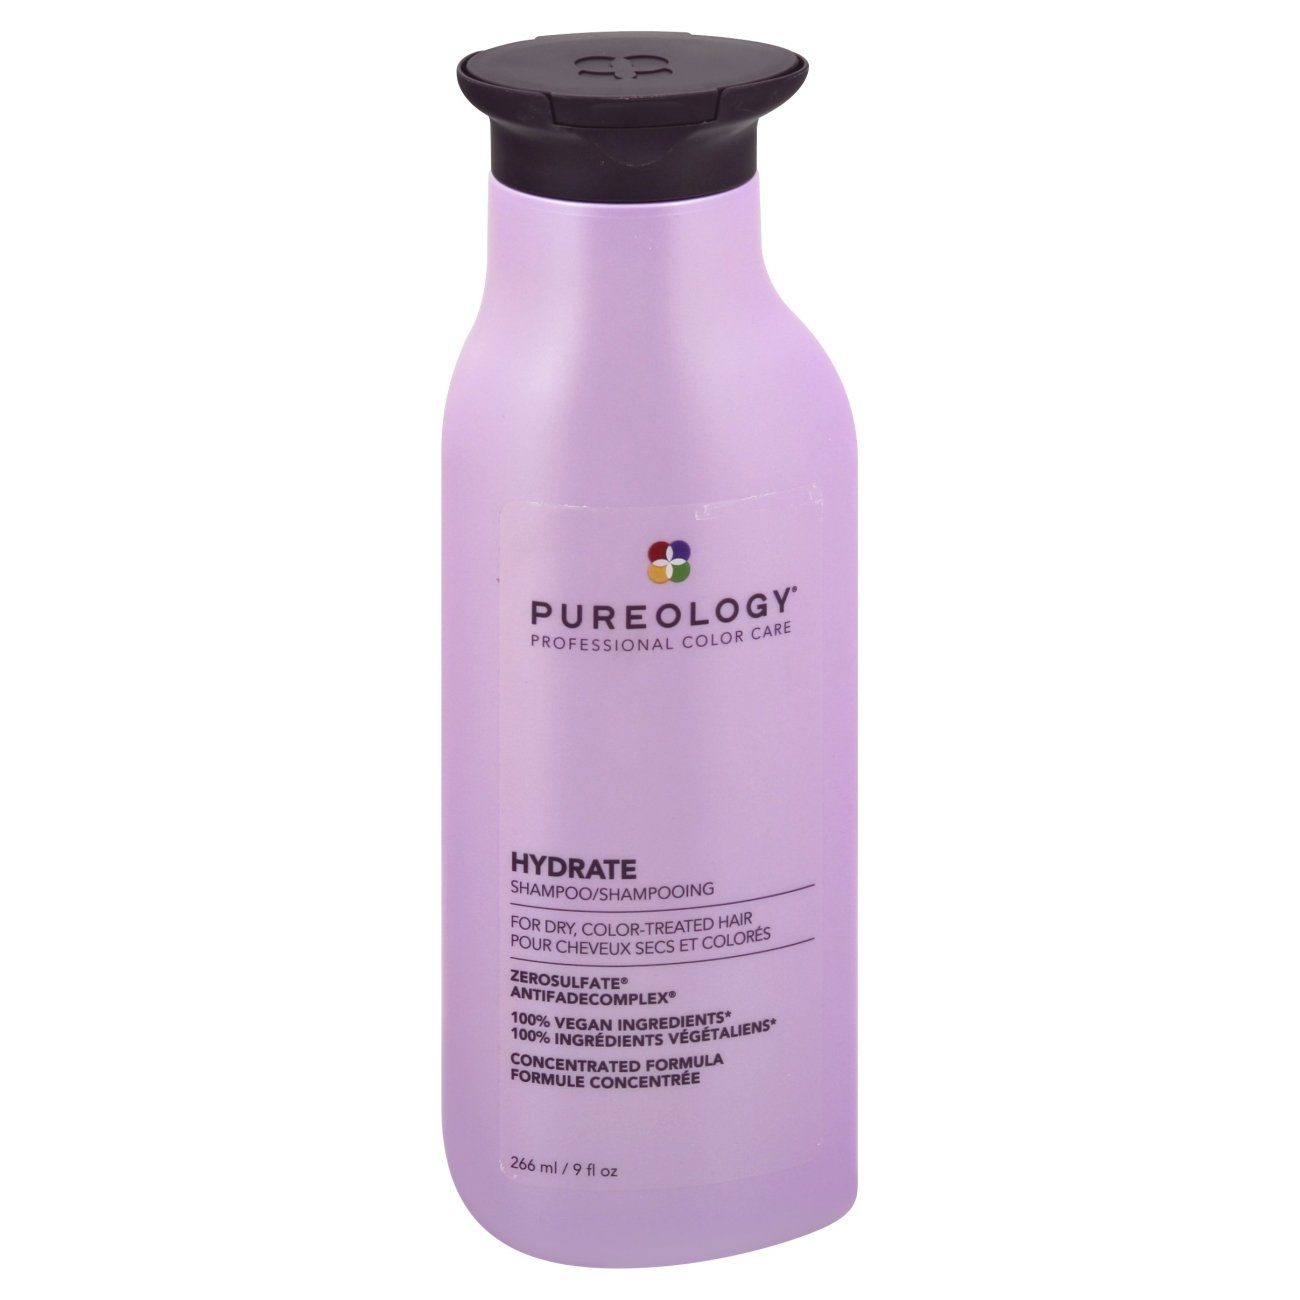 Pureology Hydrate Shampoo - Shop Shampoo Conditioner at H-E-B